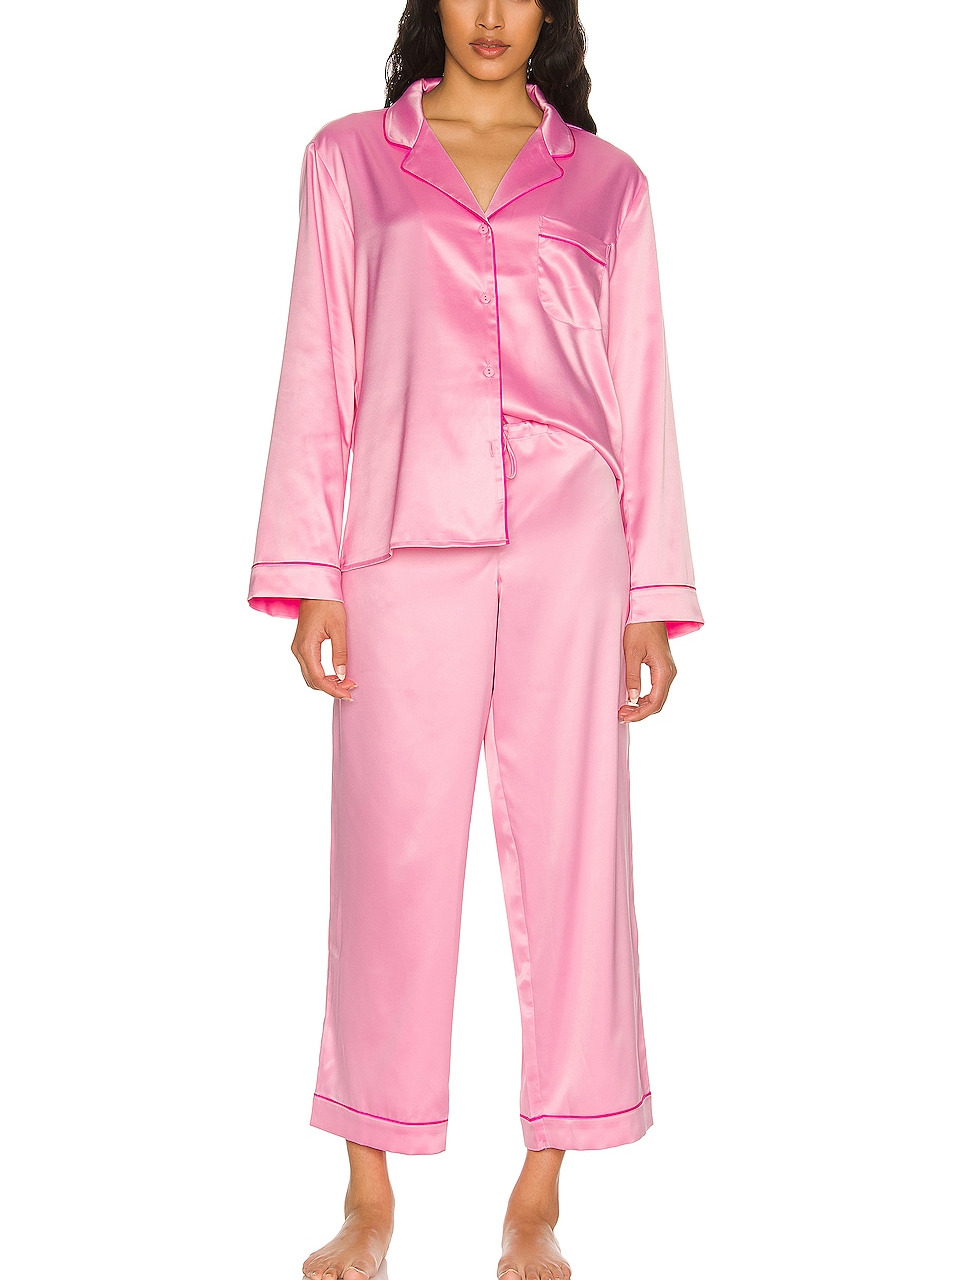 Generation Love Pink Pajama Set